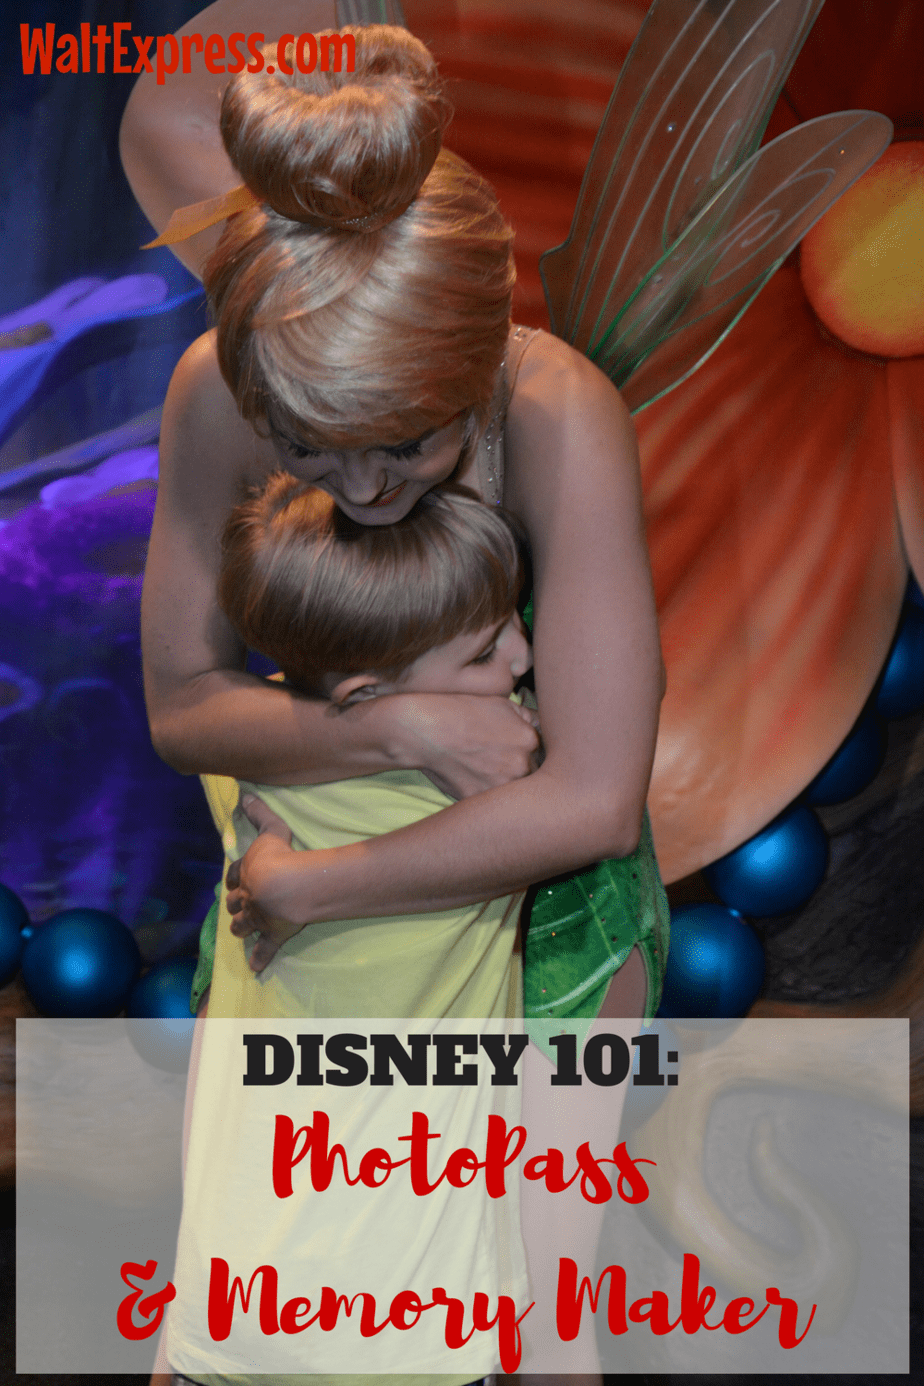 Disney 101: PhotoPass and Memory Maker